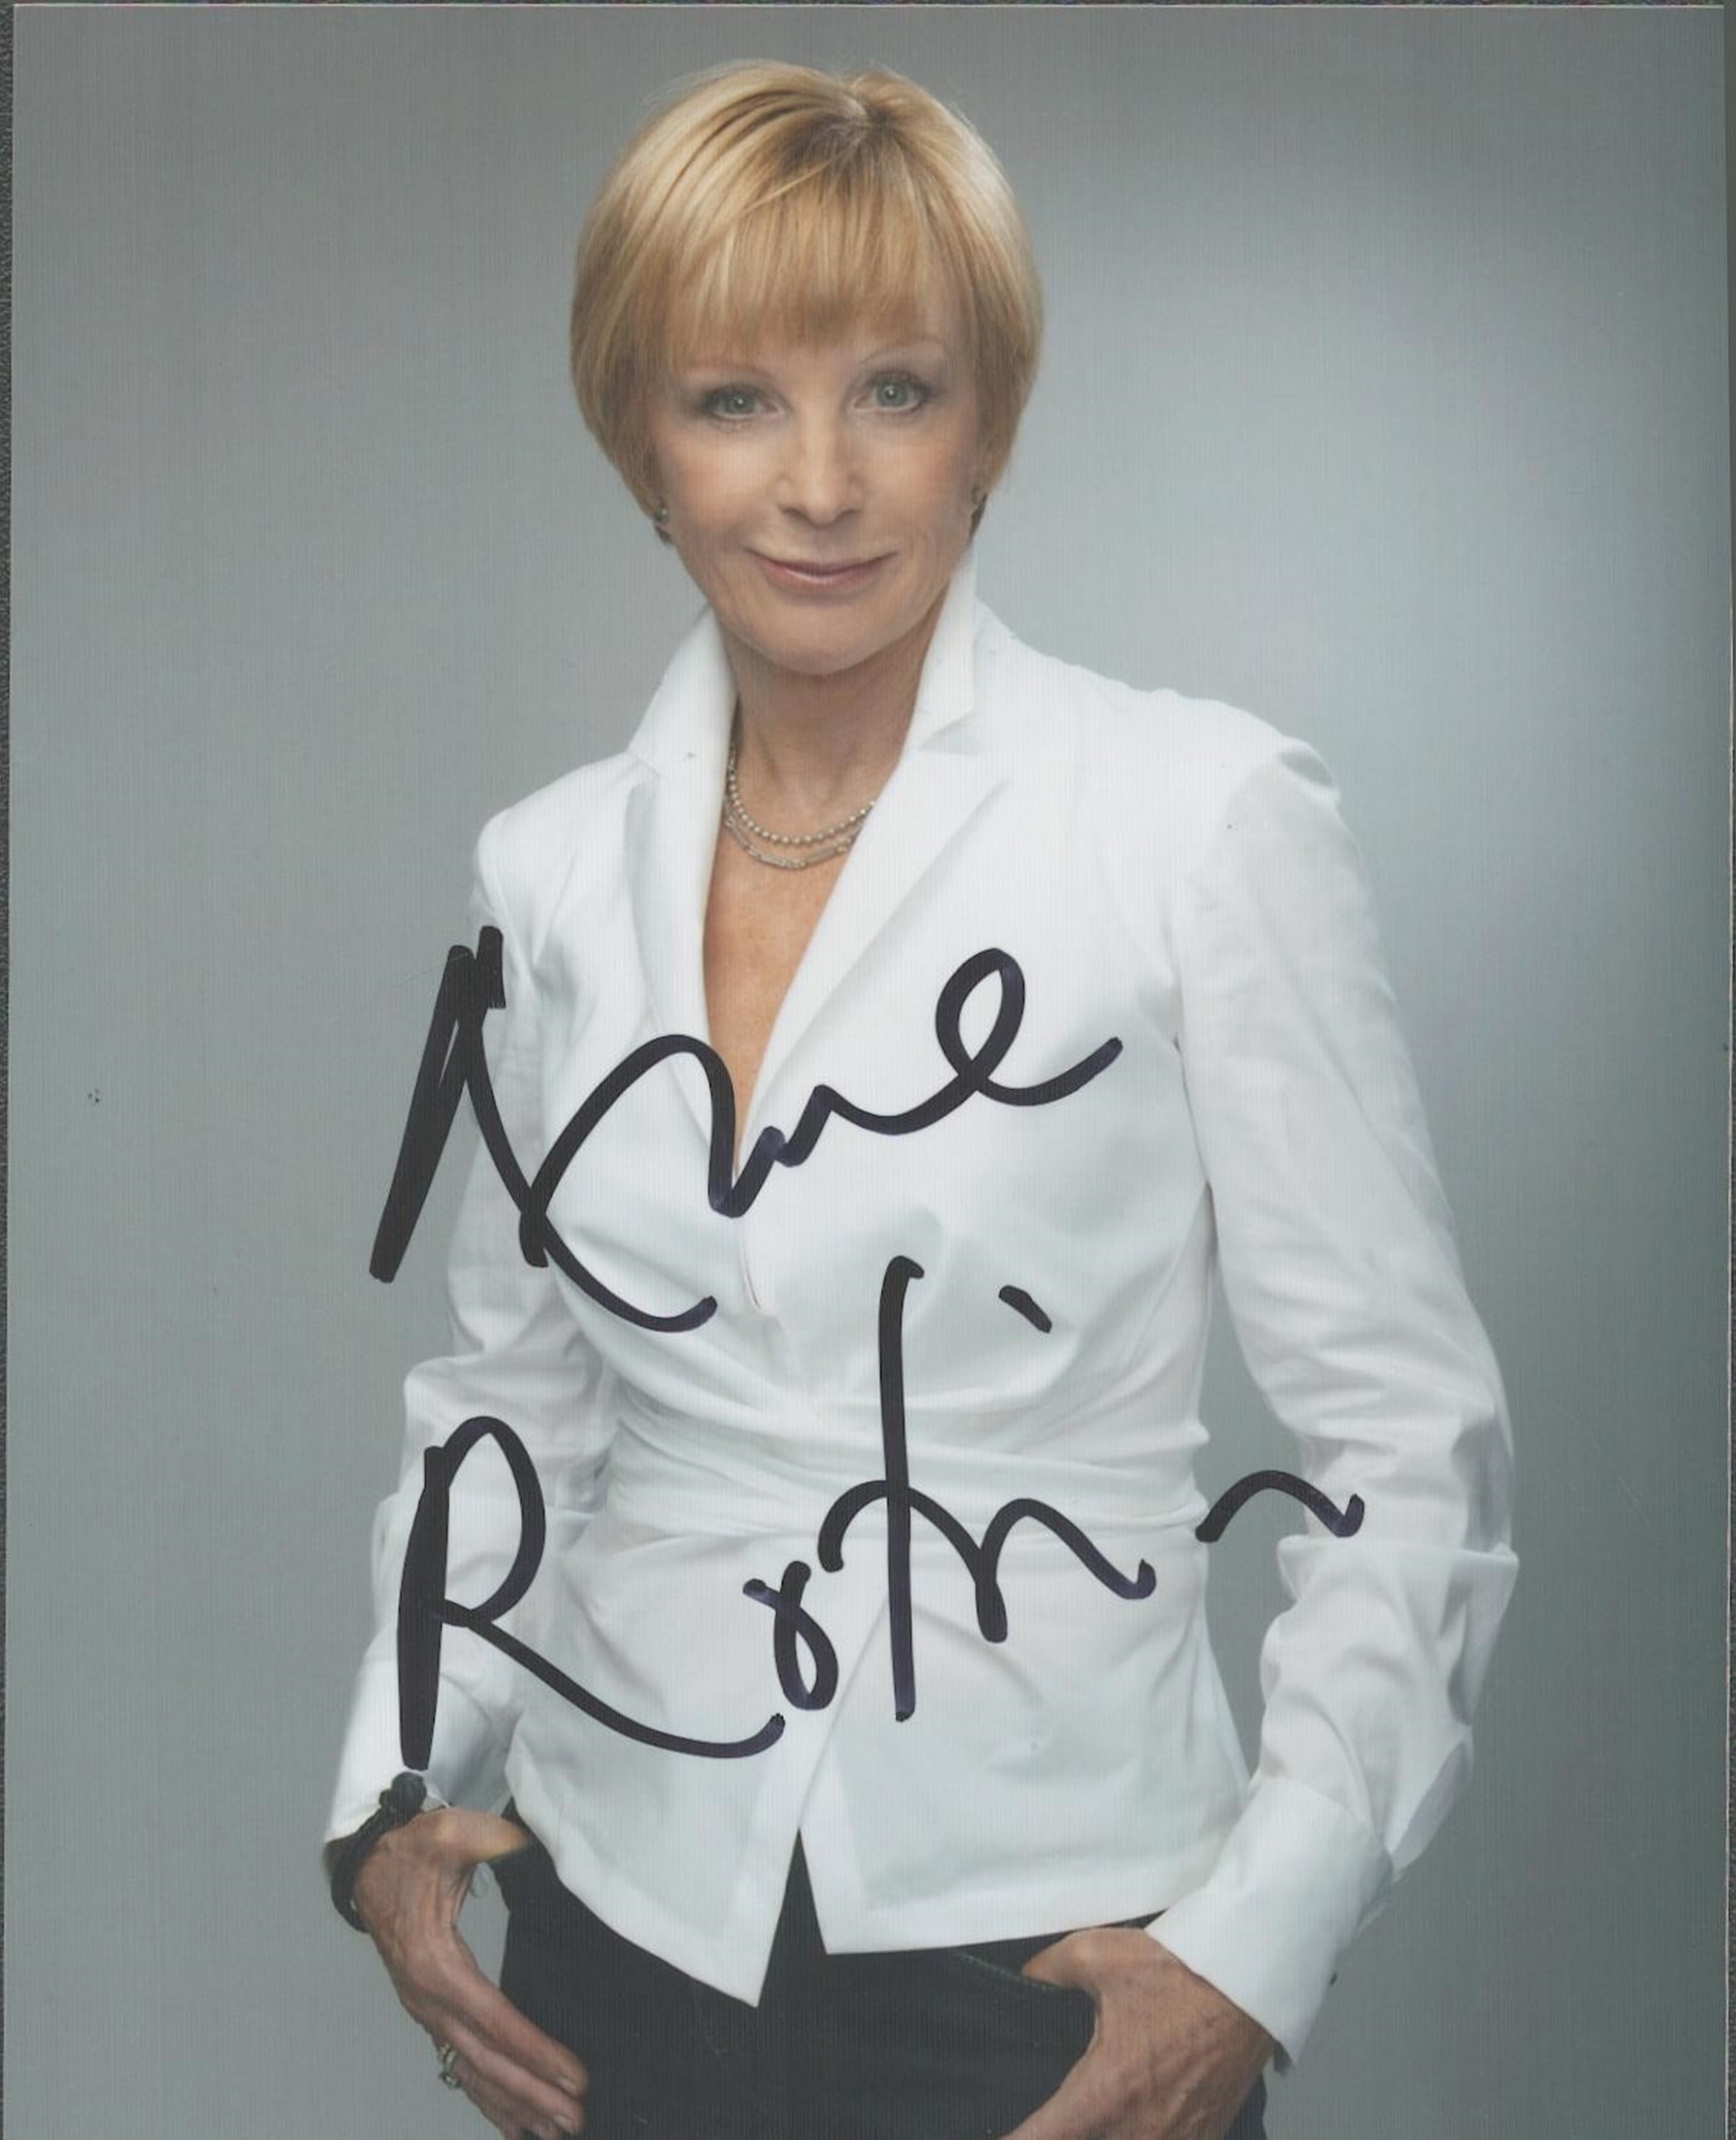 Anne Robinson signed 6x4 colour photo. Anne Josephine Robinson (born 26 September 1944) is an